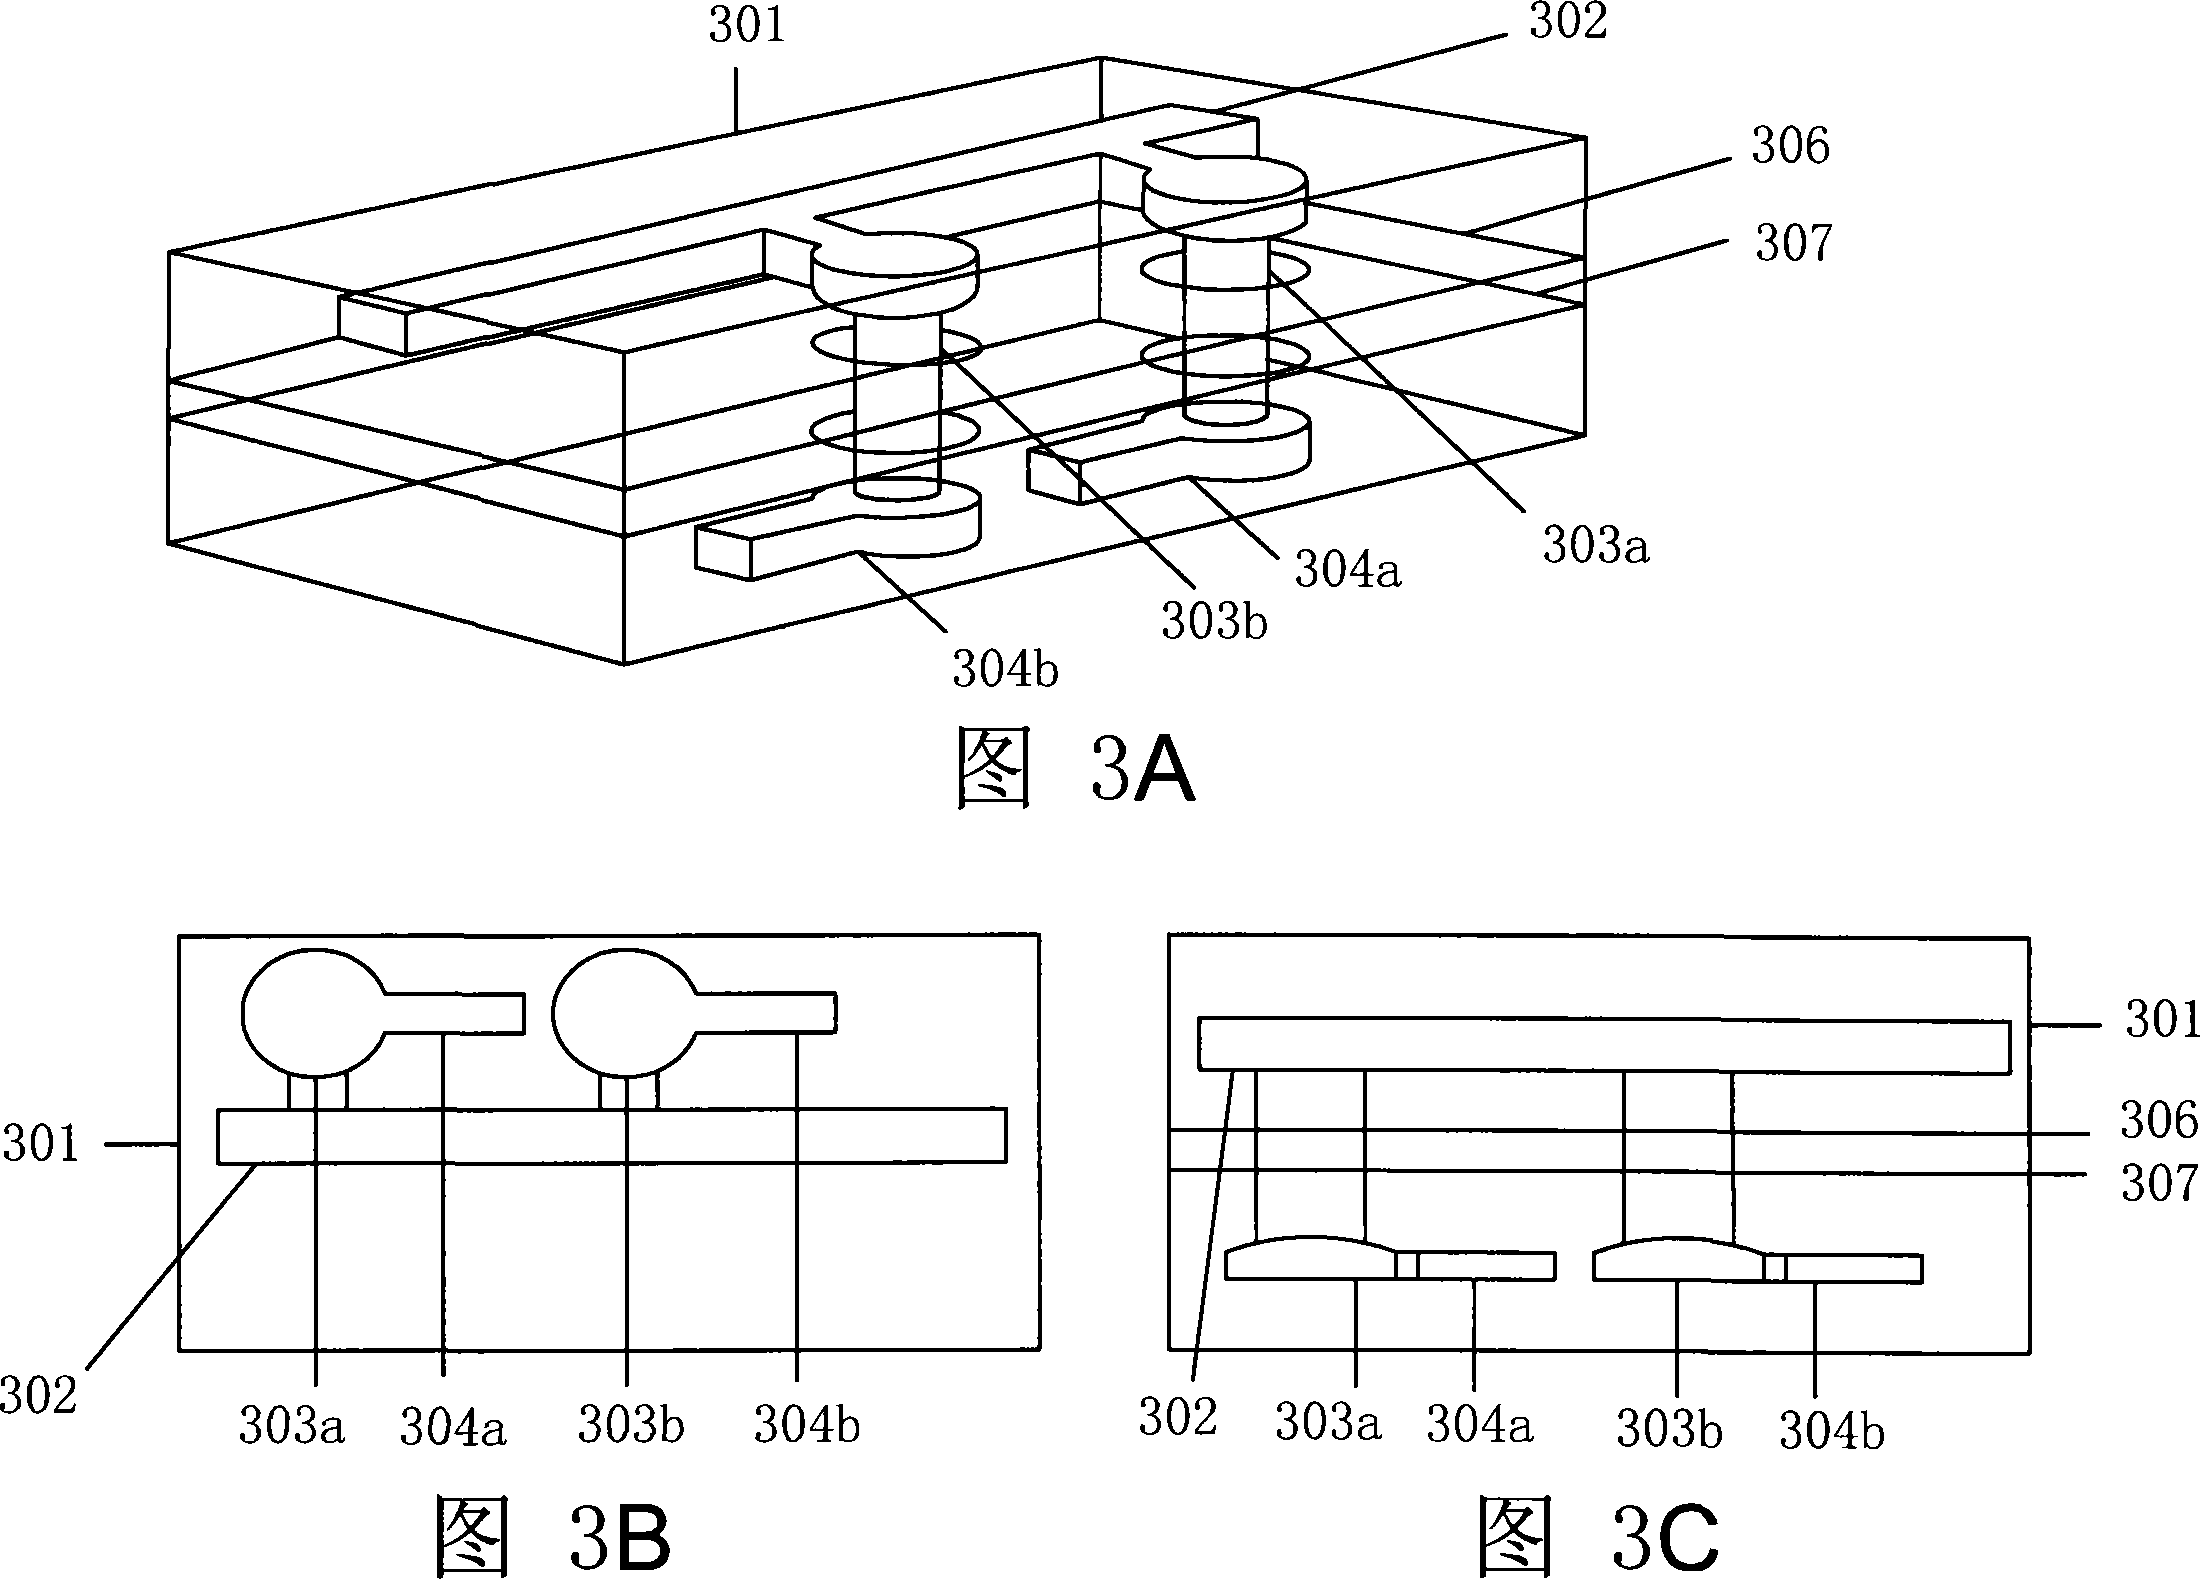 Base plate impedance match device